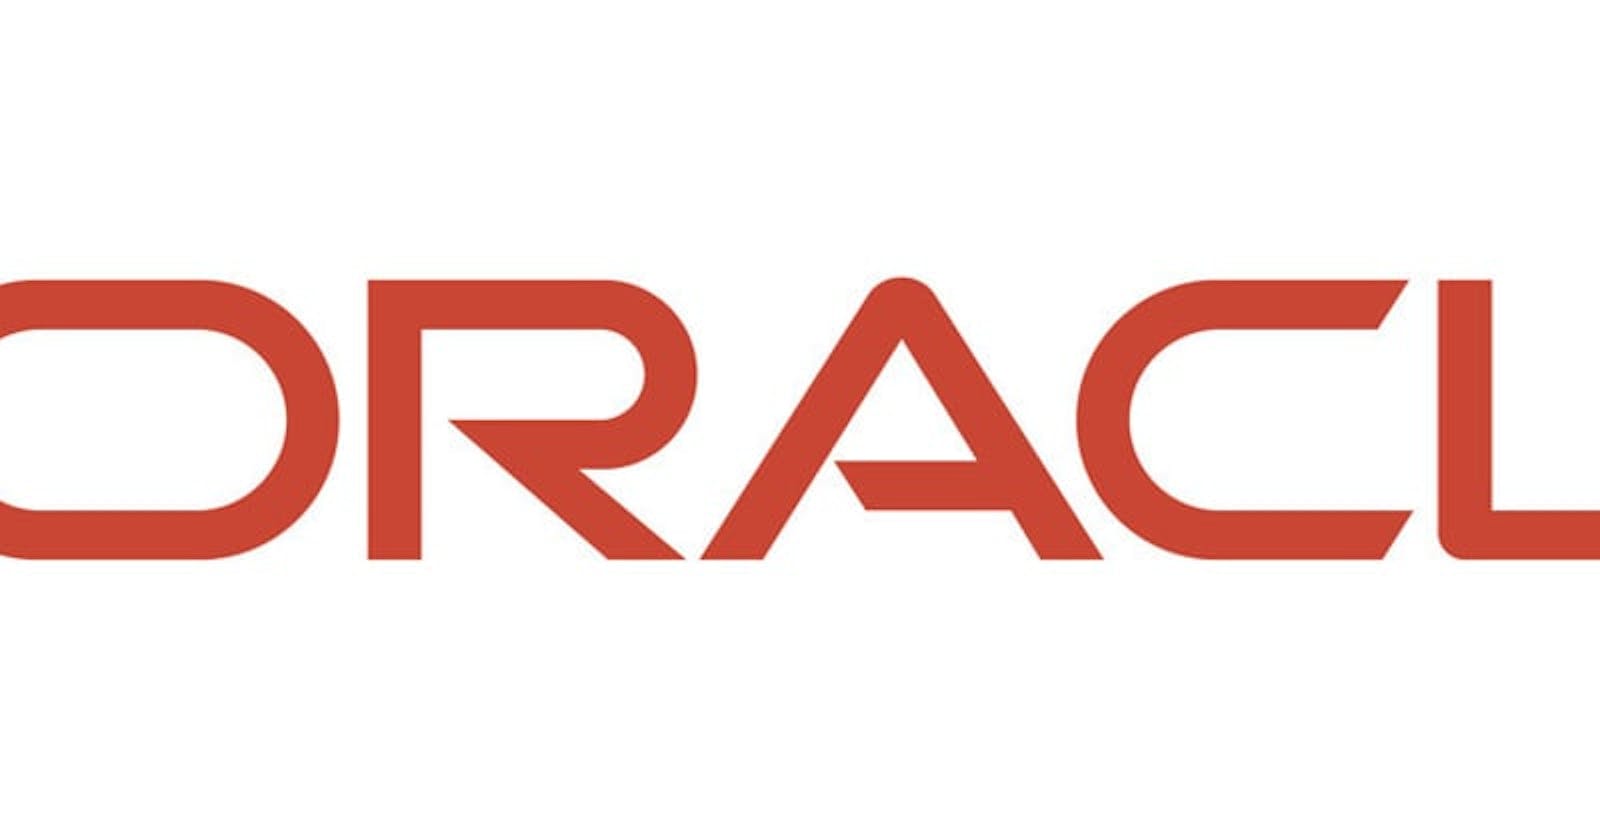 Oracle Trainee Program: My experience so far..